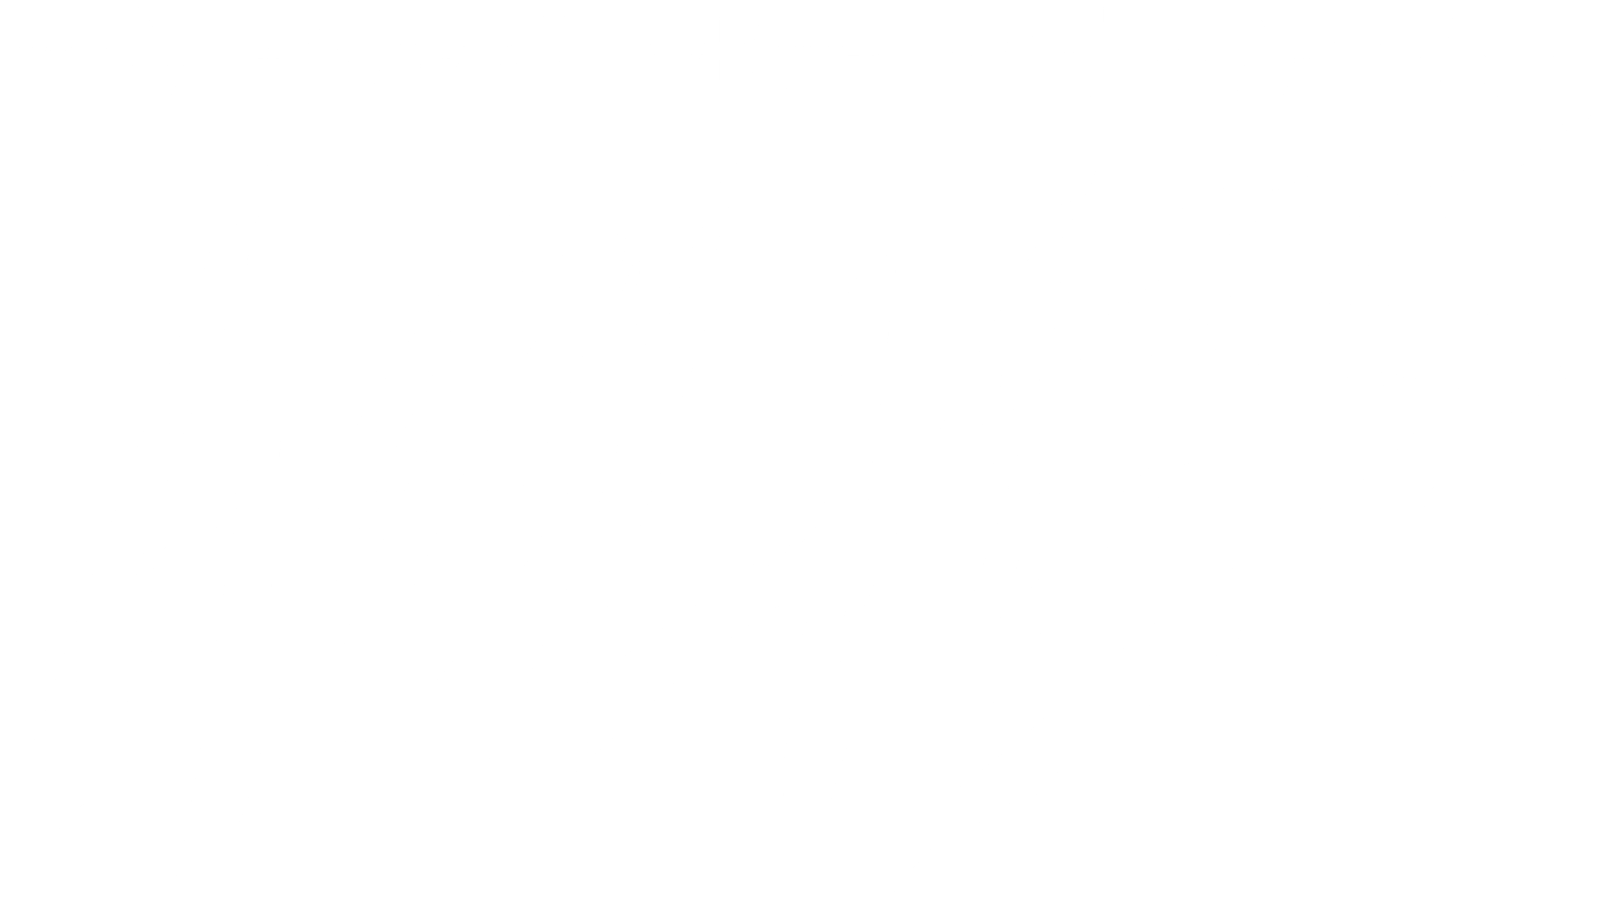 AmericanWolves